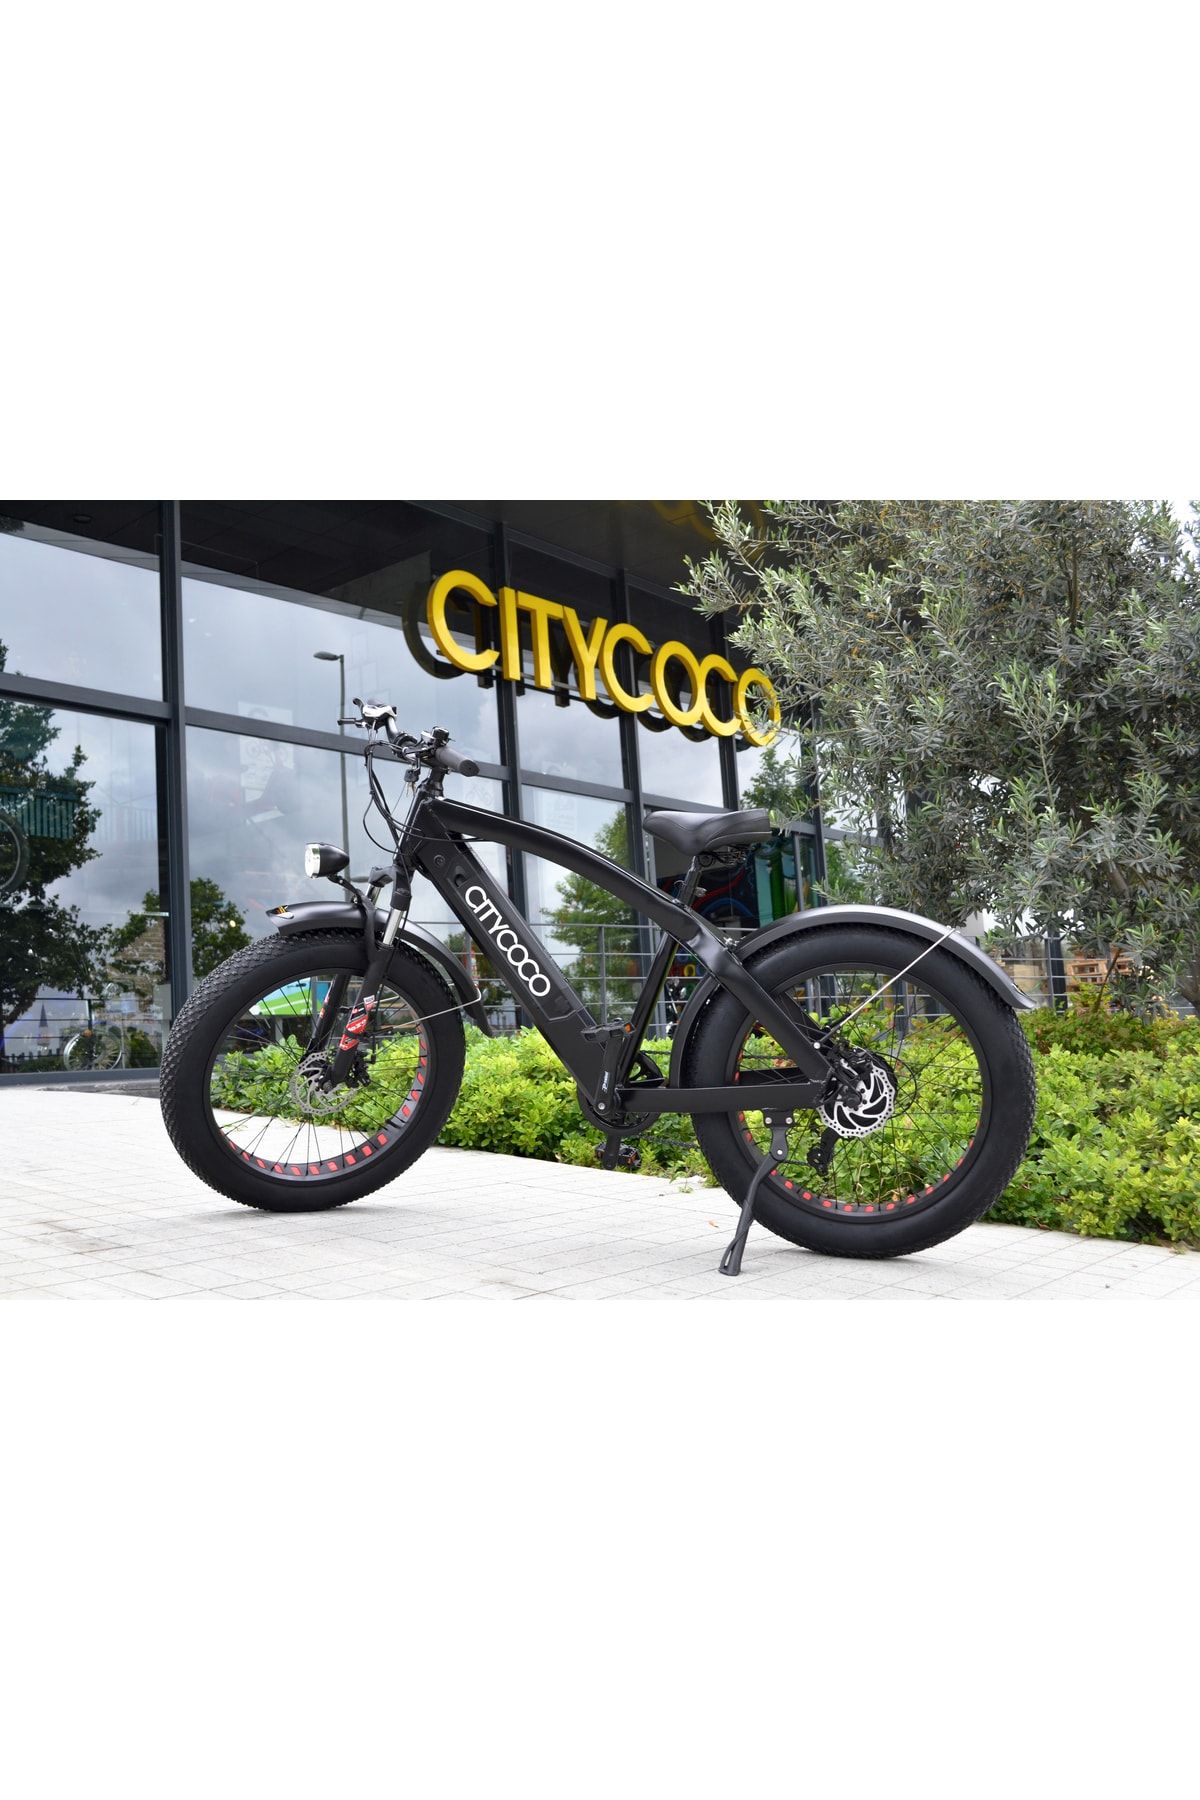 Citycoco Fat Bike Bisiklet